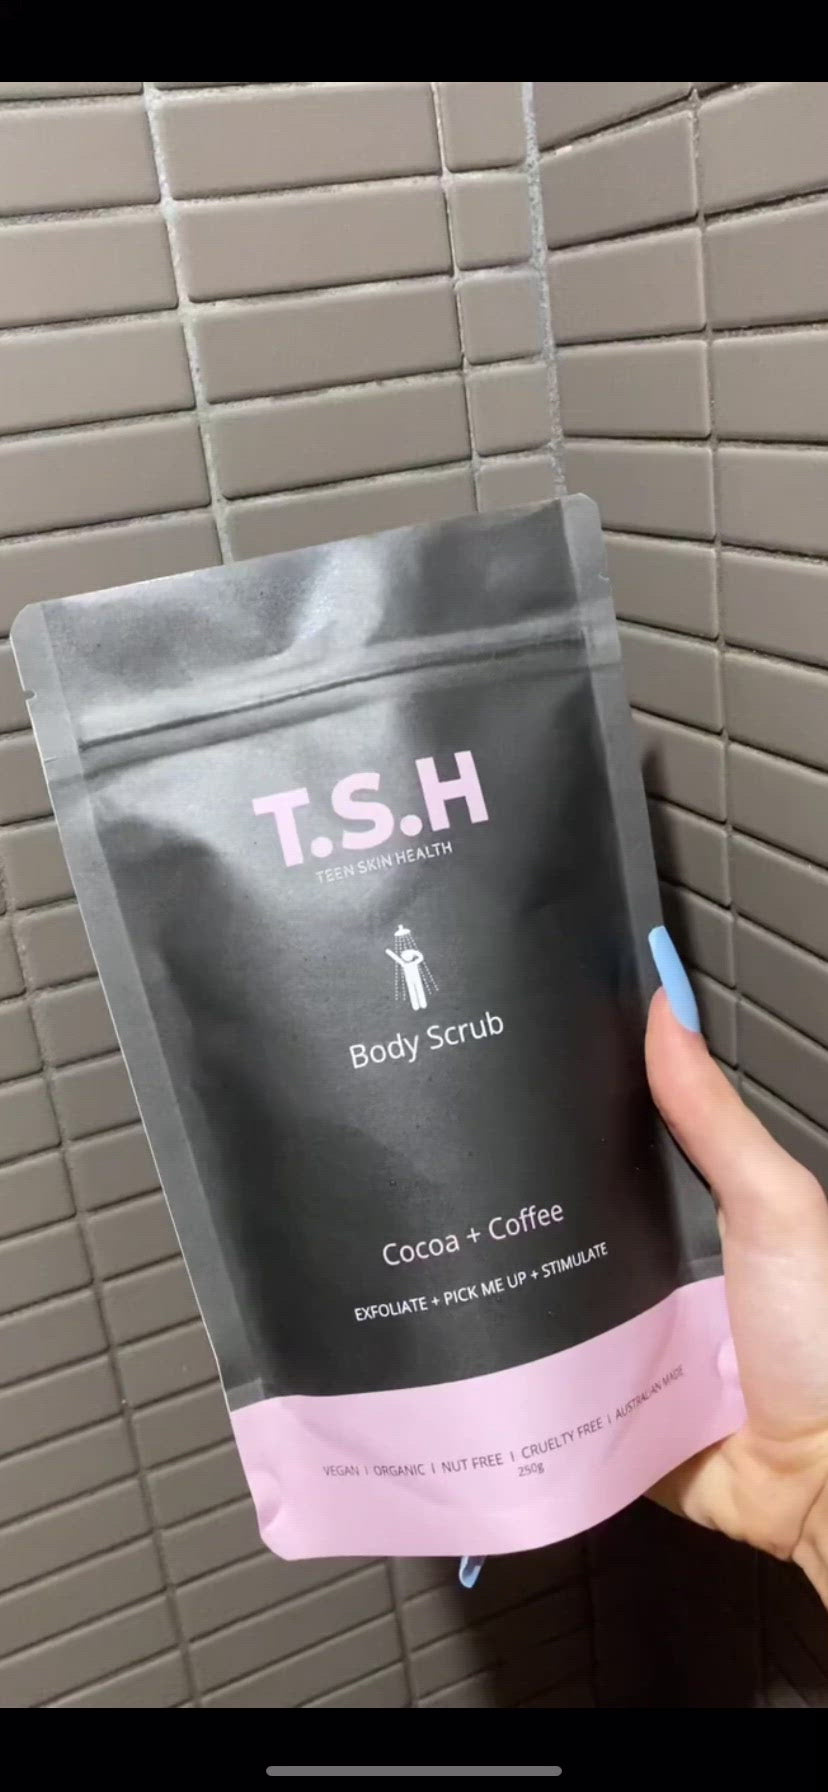 Best Coffee body scrub for teens